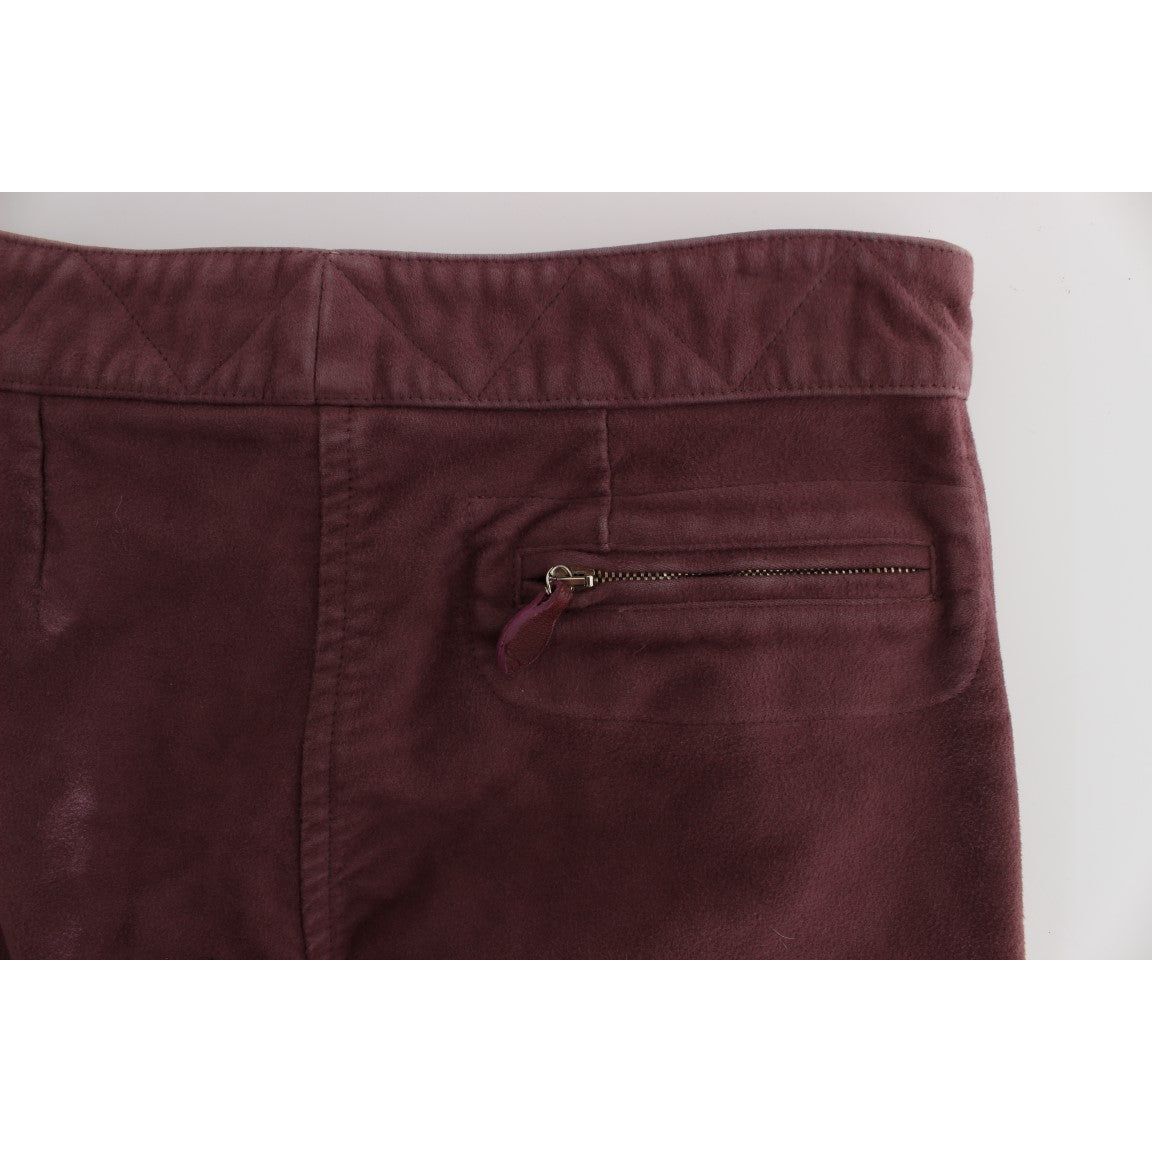 Ermanno Scervino Chic Bordeaux Capri Cropped Cargo Pants bordeaux-cotton-cropped-cargo-pants